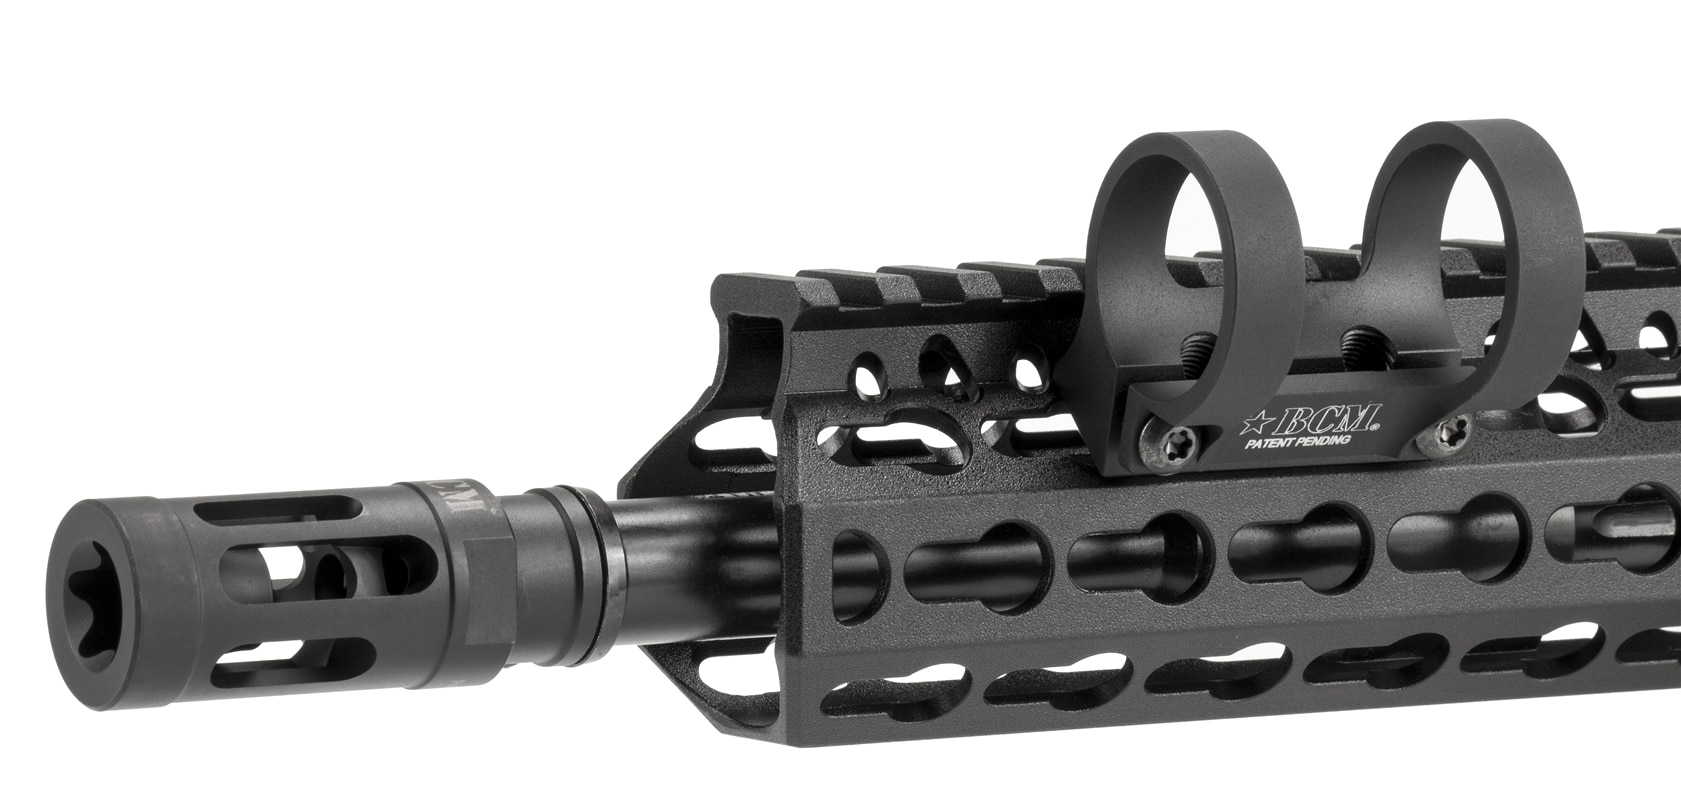 KeyMod utilizes keyhole shapes to mount rifle accessories to the handguard. (Photo: Bravo Company)